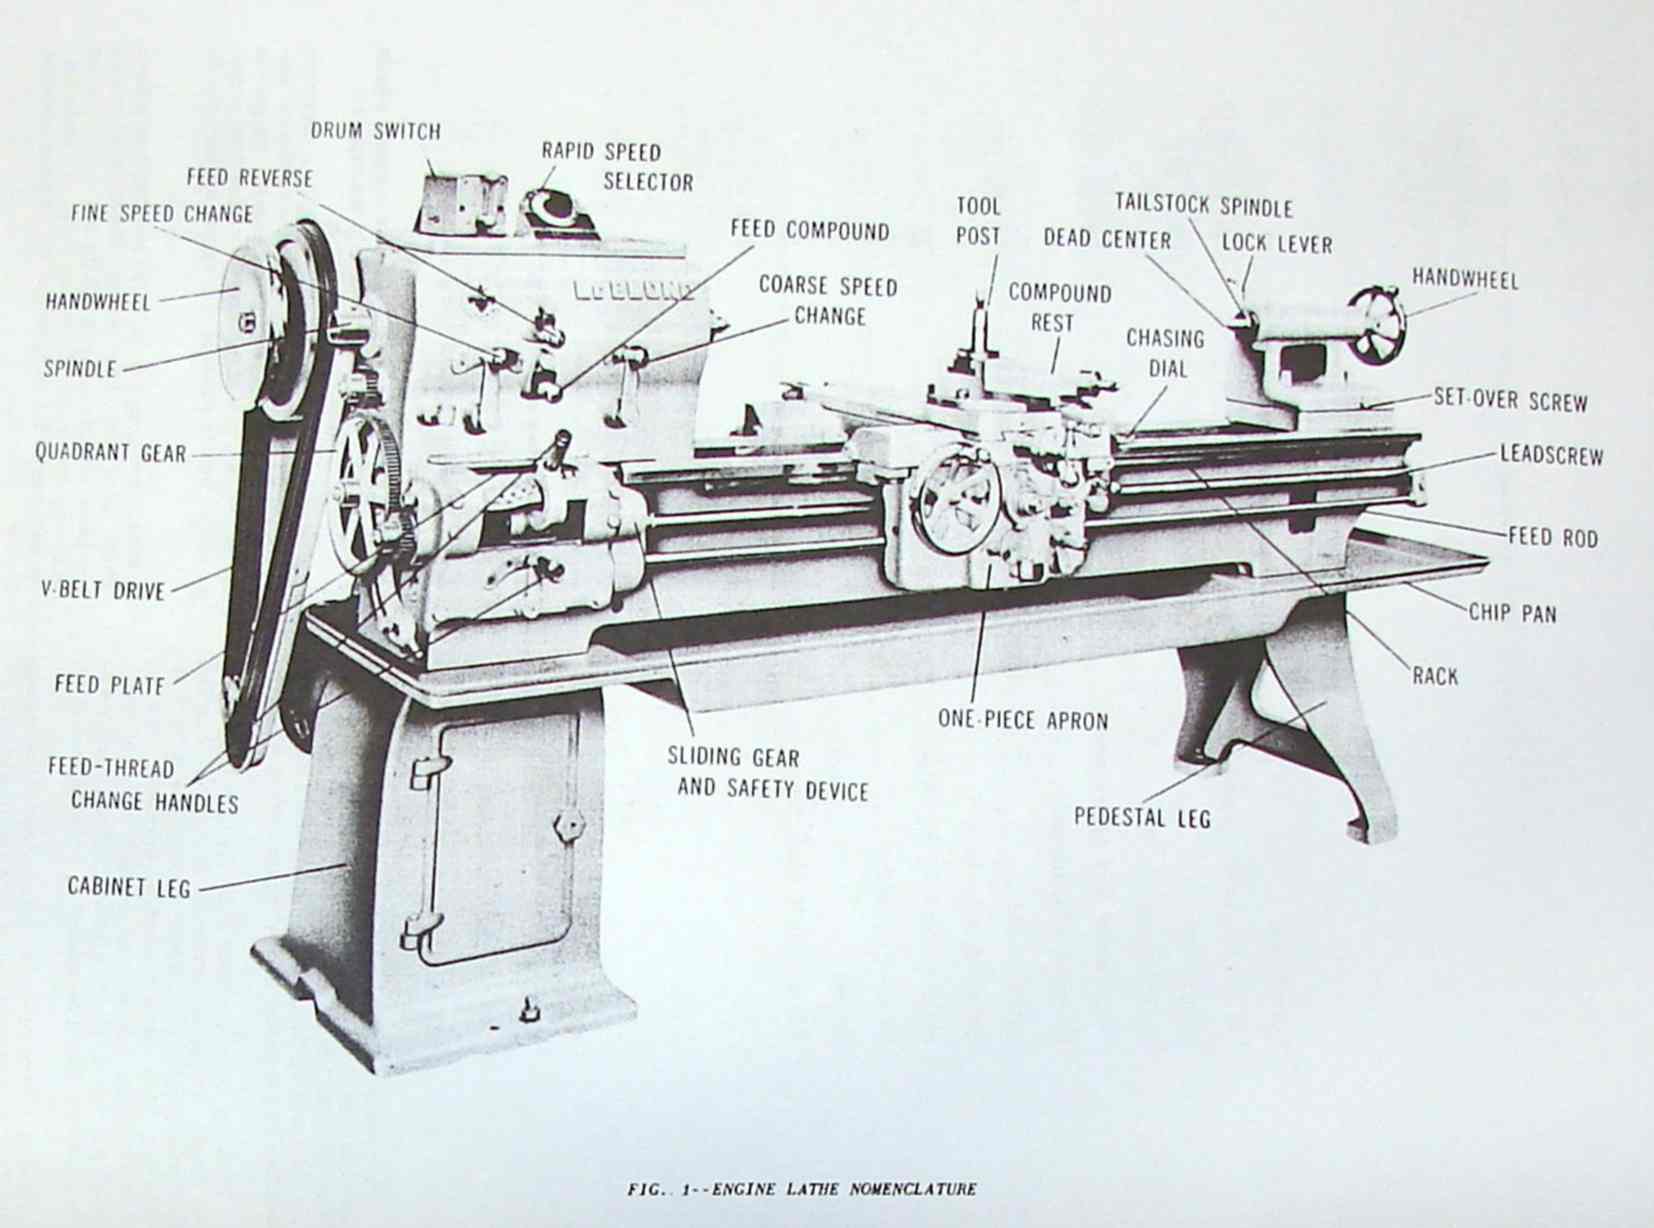 Leblond 13" 15 17 & 19 #18 Lathe Operations Maintenance and Parts Manual 1962 